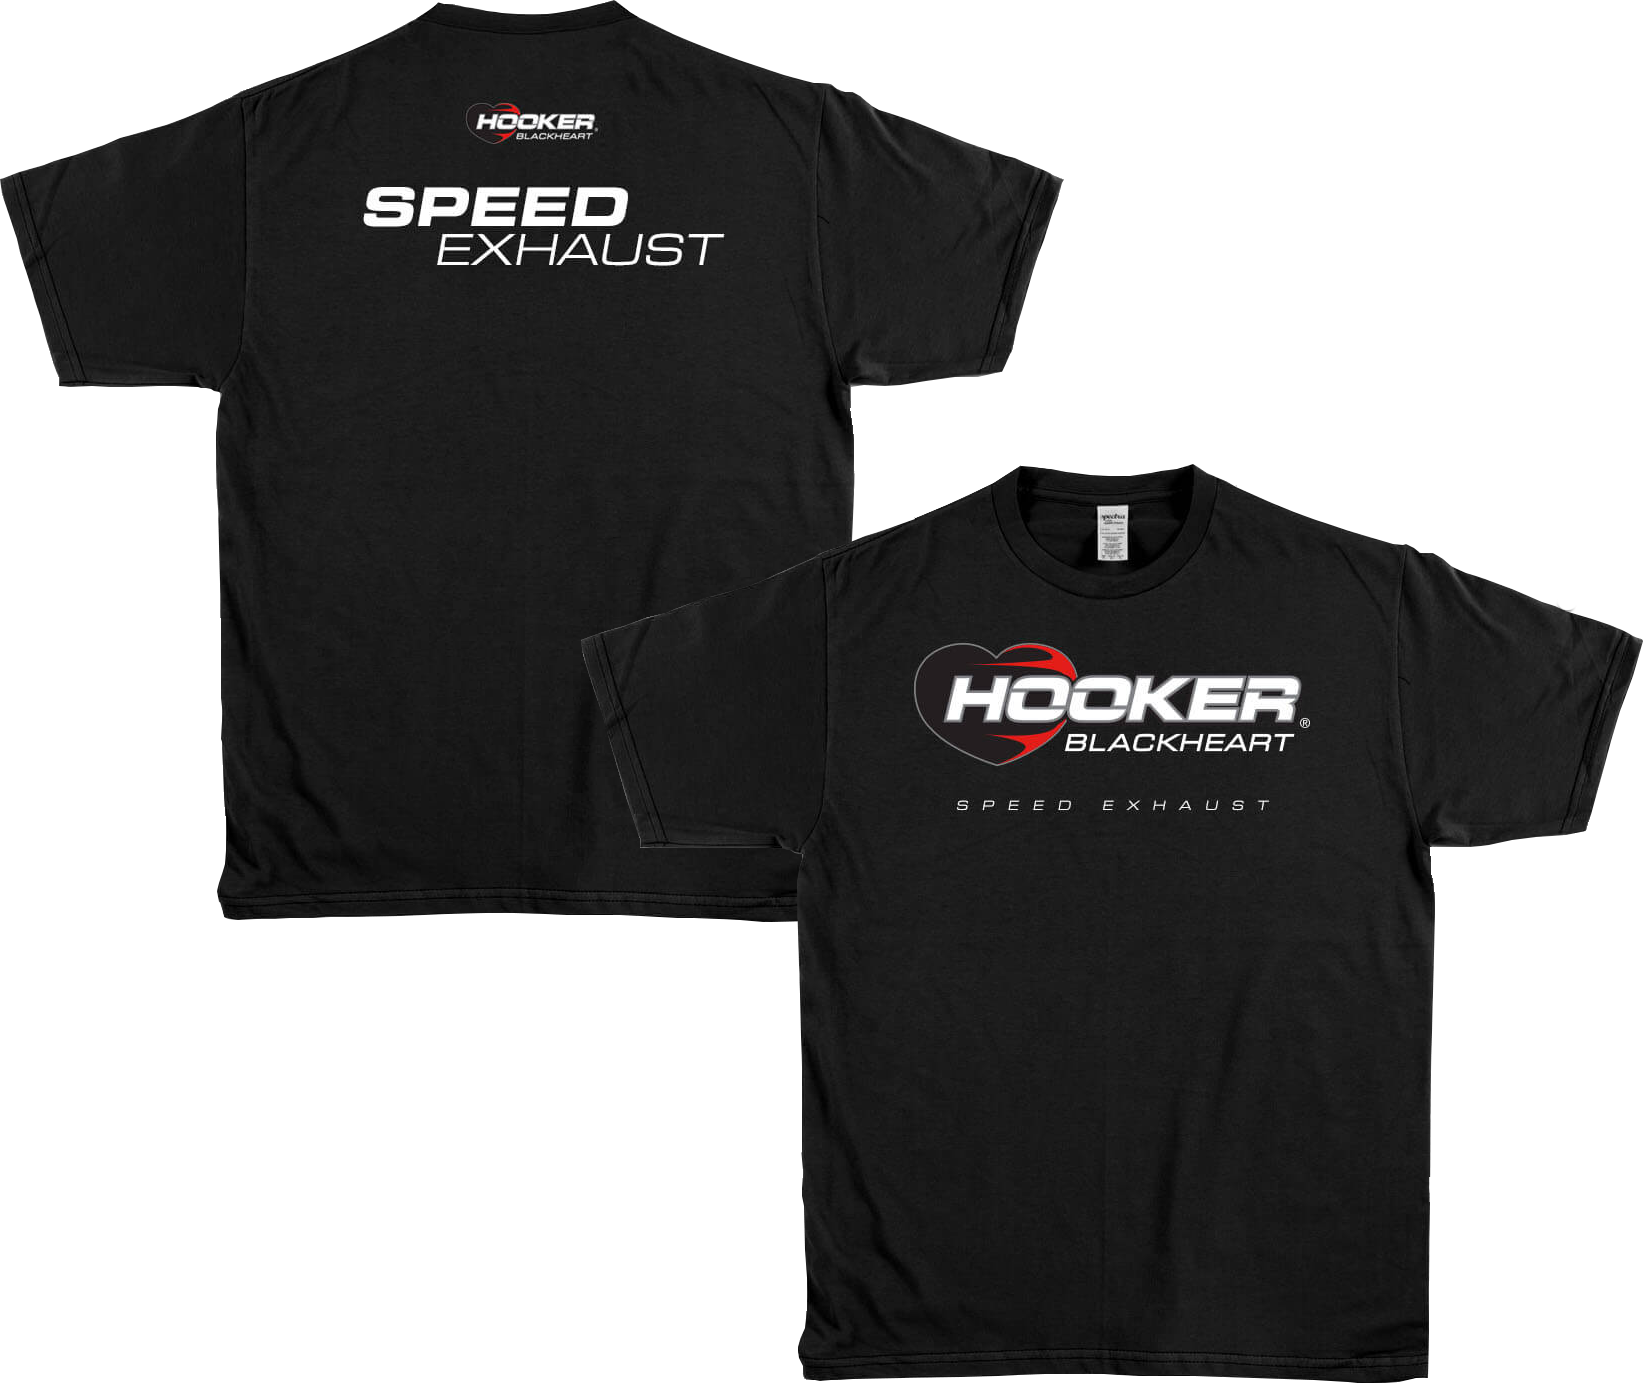 Hooker BlackHeart T-Shirt 10155-XXLHKR